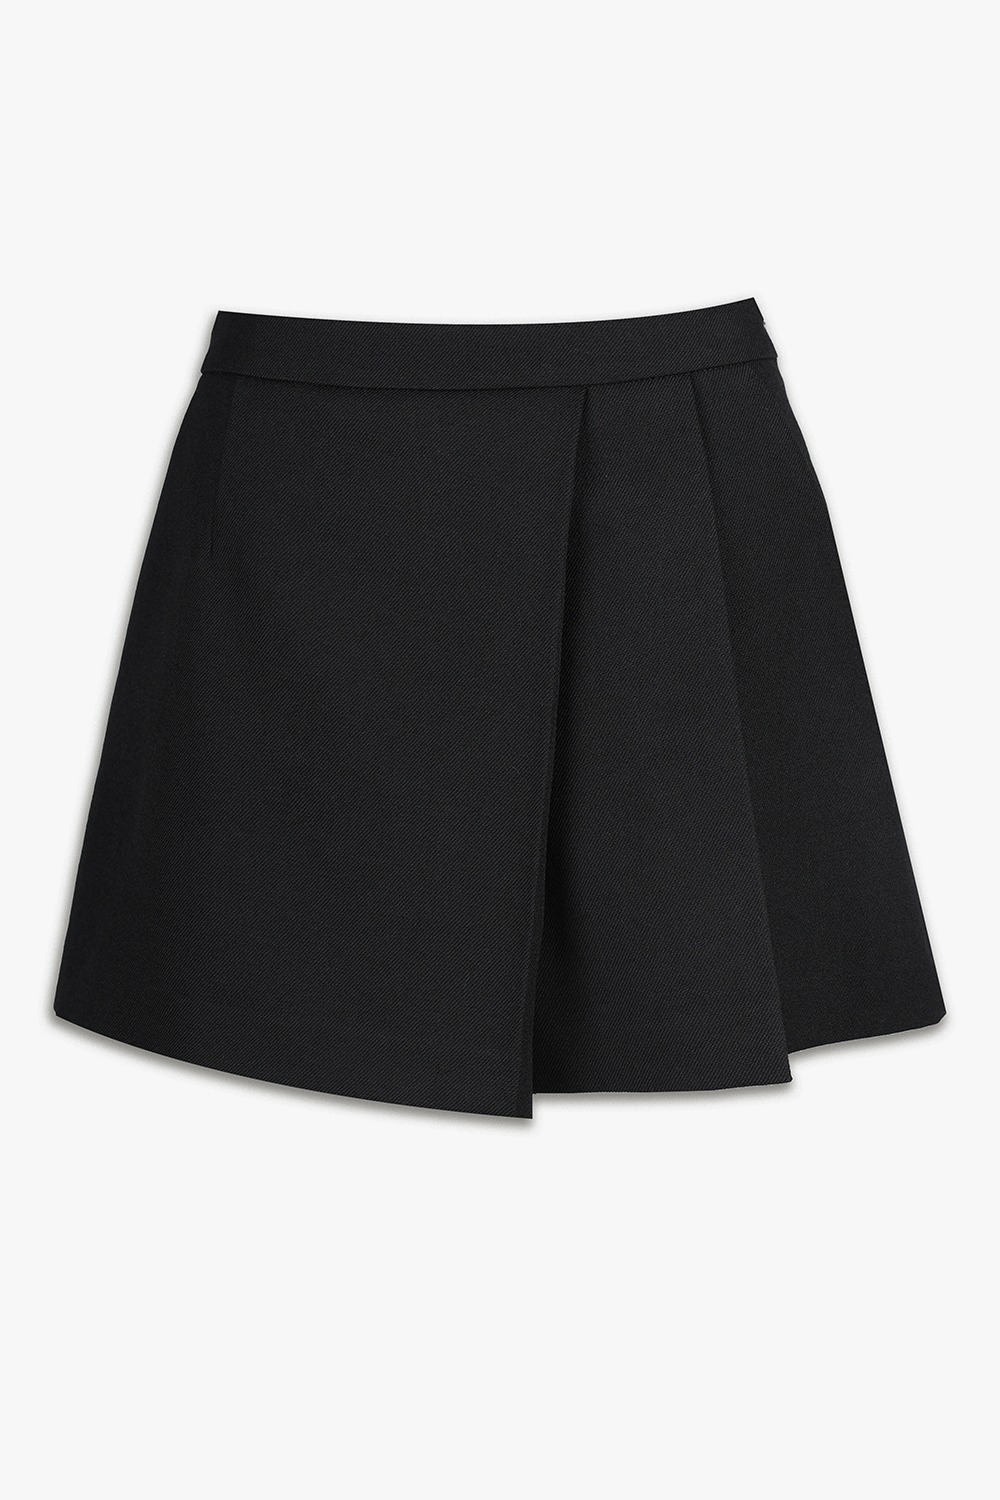 HIGH QUALITY LINE - Virgin Wool Culotte Pants (BLACK)